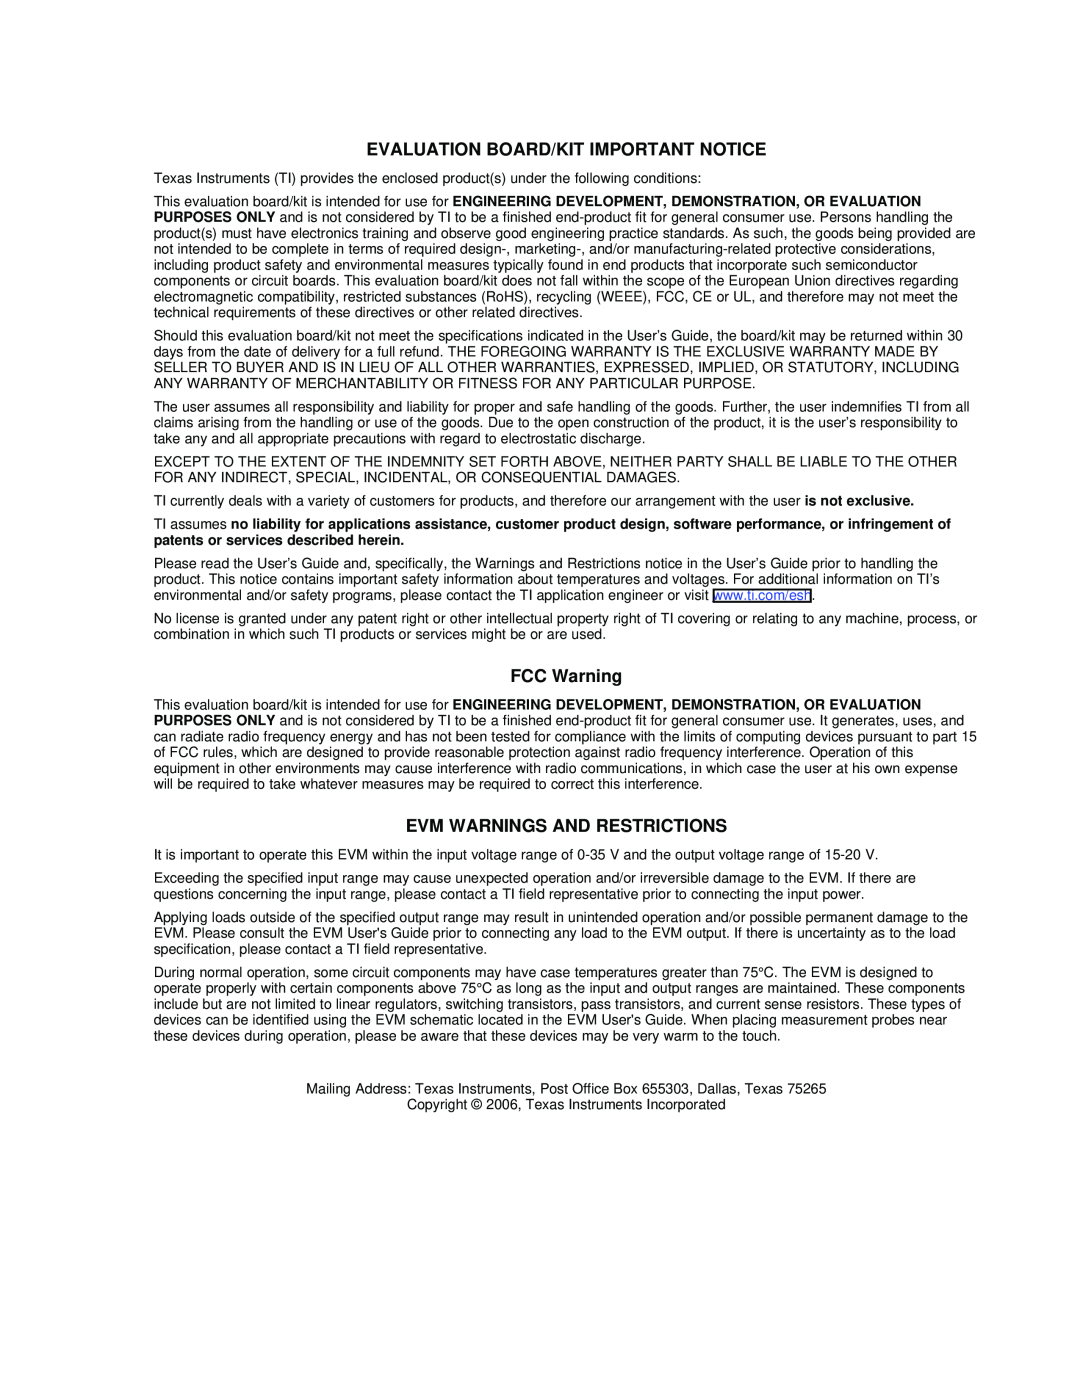 Texas Instruments TAS5518 manual Evaluation Board/Kit Important Notice, FCC Warning, Evm Warnings And Restrictions 